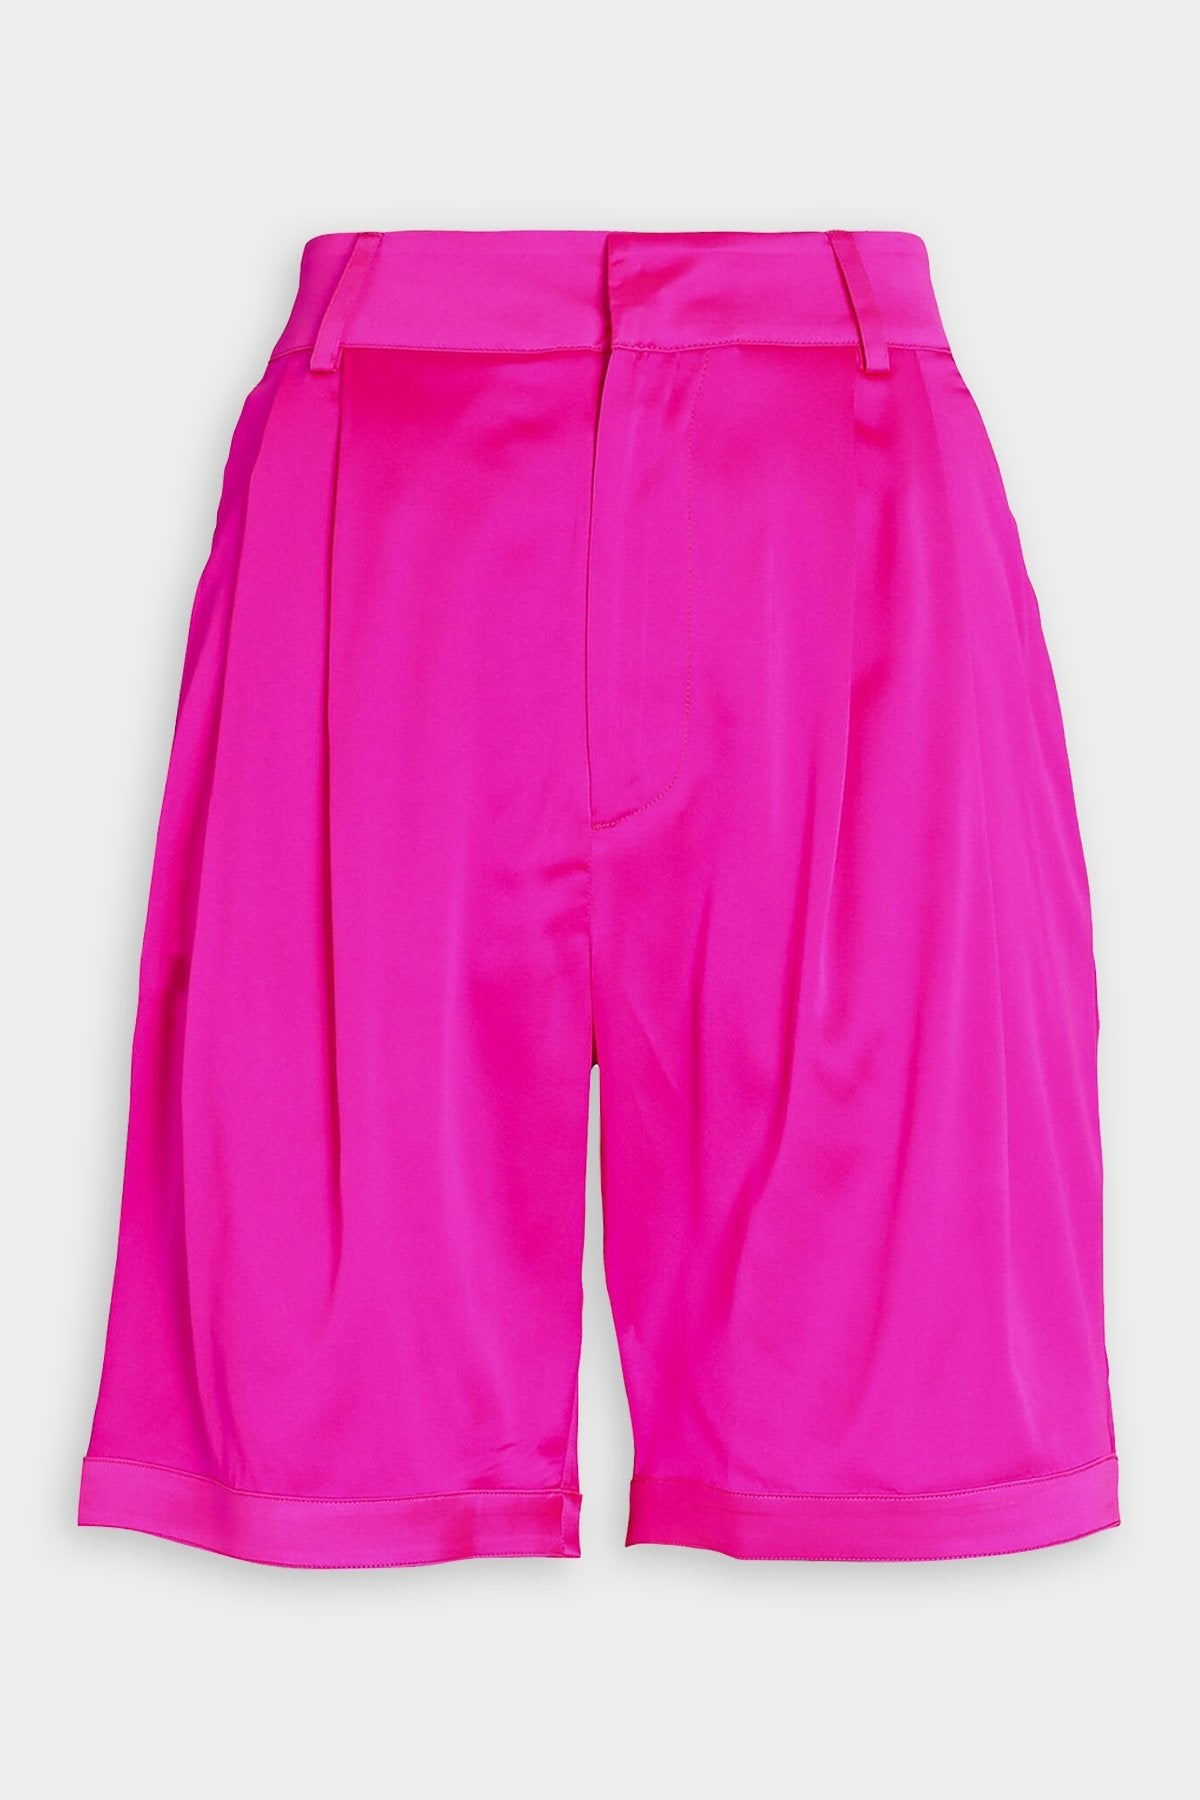 Riri Shorts in Neon Pink - shop-olivia.com